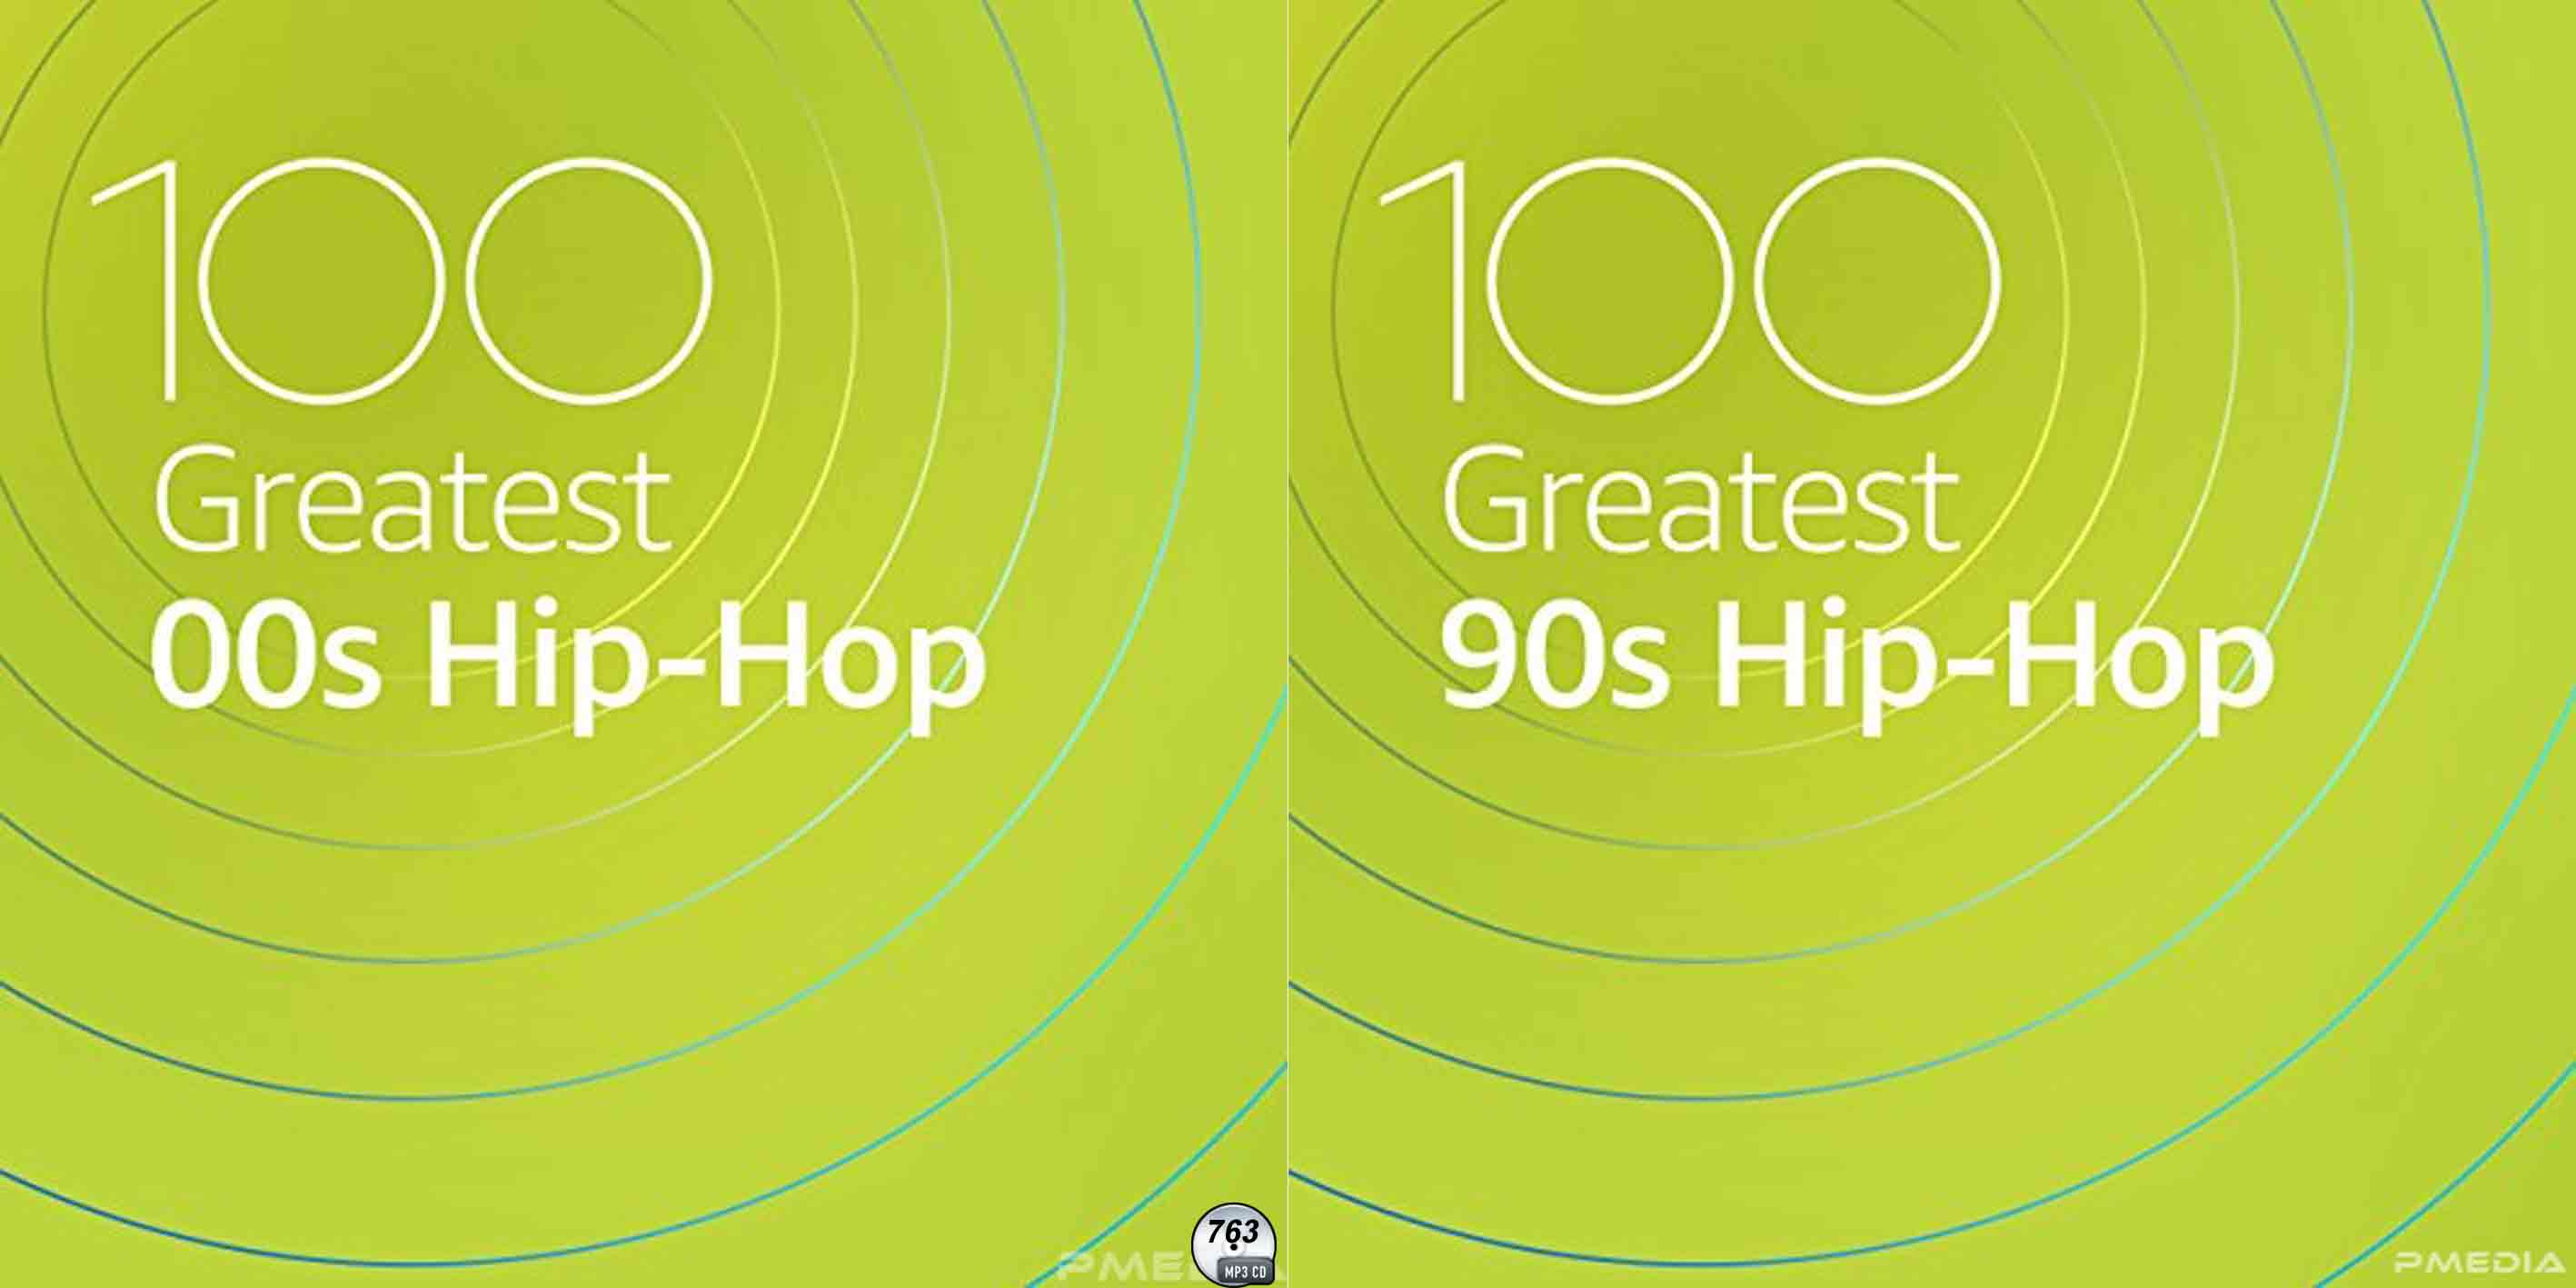 763□200曲 100 Greatest 00s Hip-Hop□90s Hip-Hop CD - souflesｈ 